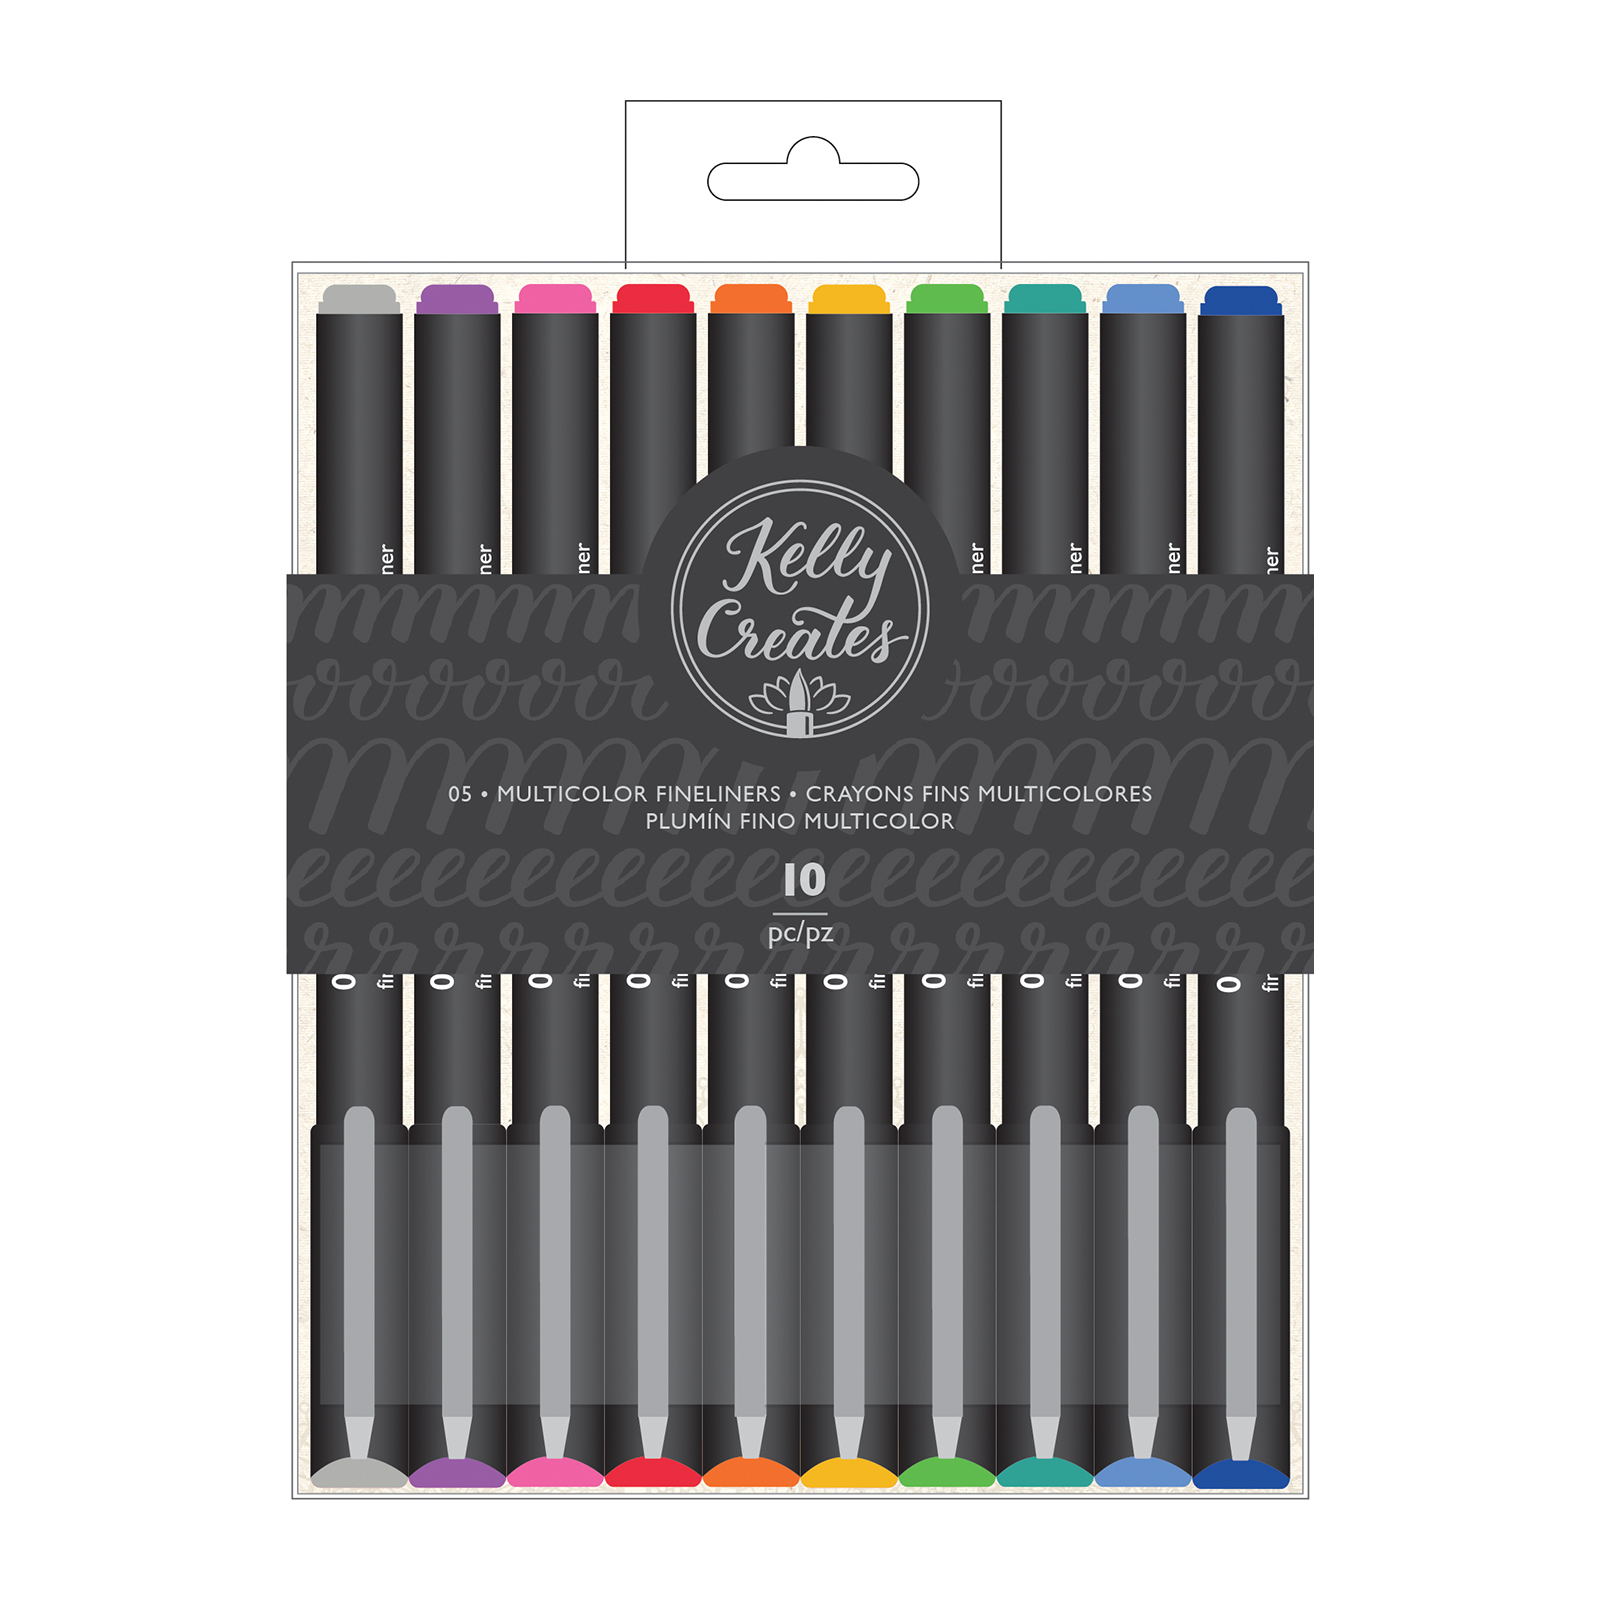 Kelly Creates Multicolor Fineliner pens | Creative Scrapbooker Magazine